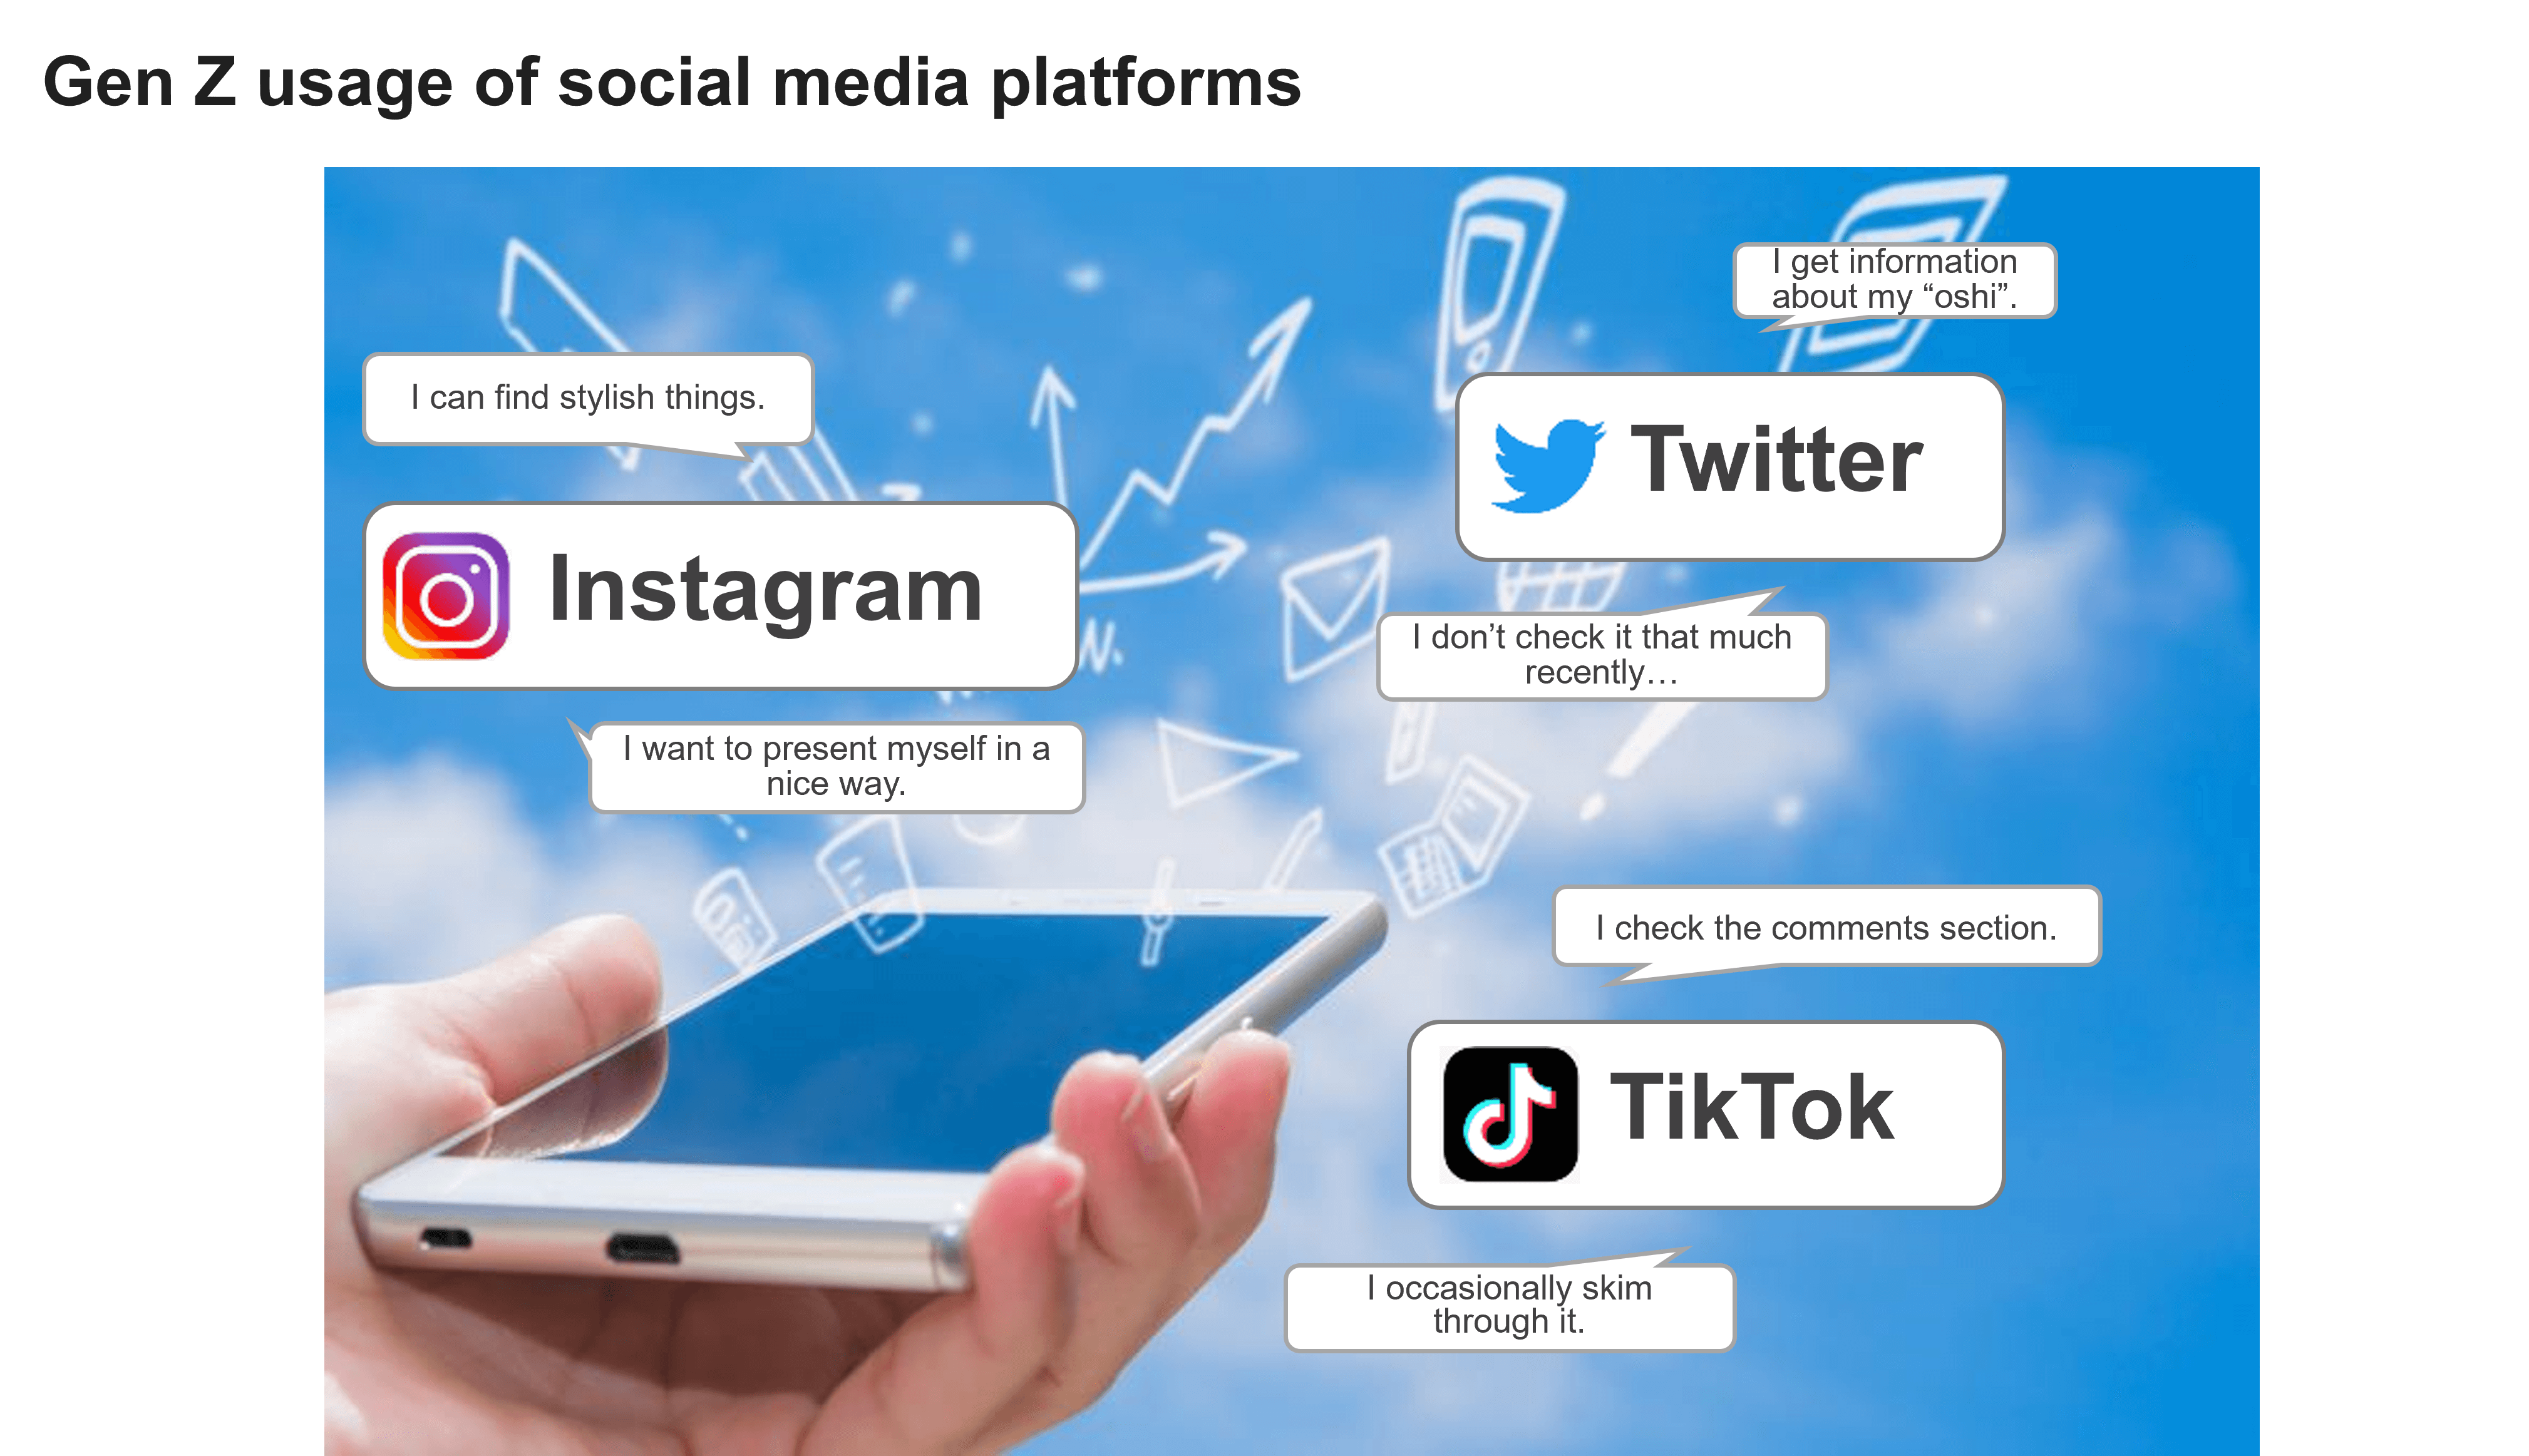 Gen Z usage of social media platforms